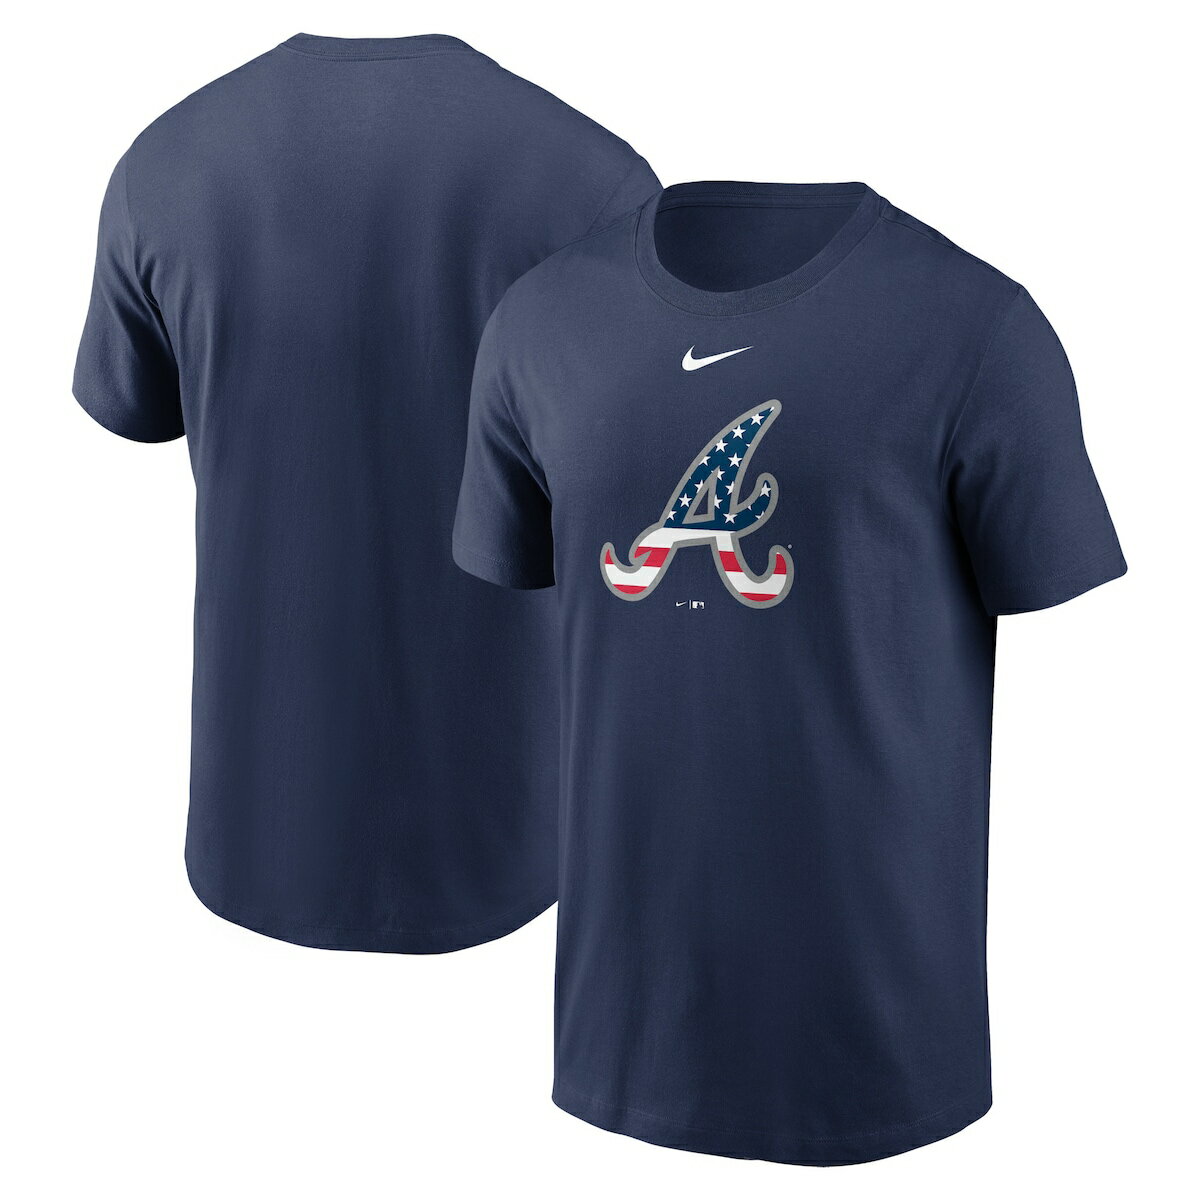 MLB ブレーブス Tシャツ Nike ナイキ メンズ ネイビー (Men's NIKE Americana Short Sleeve Tee)